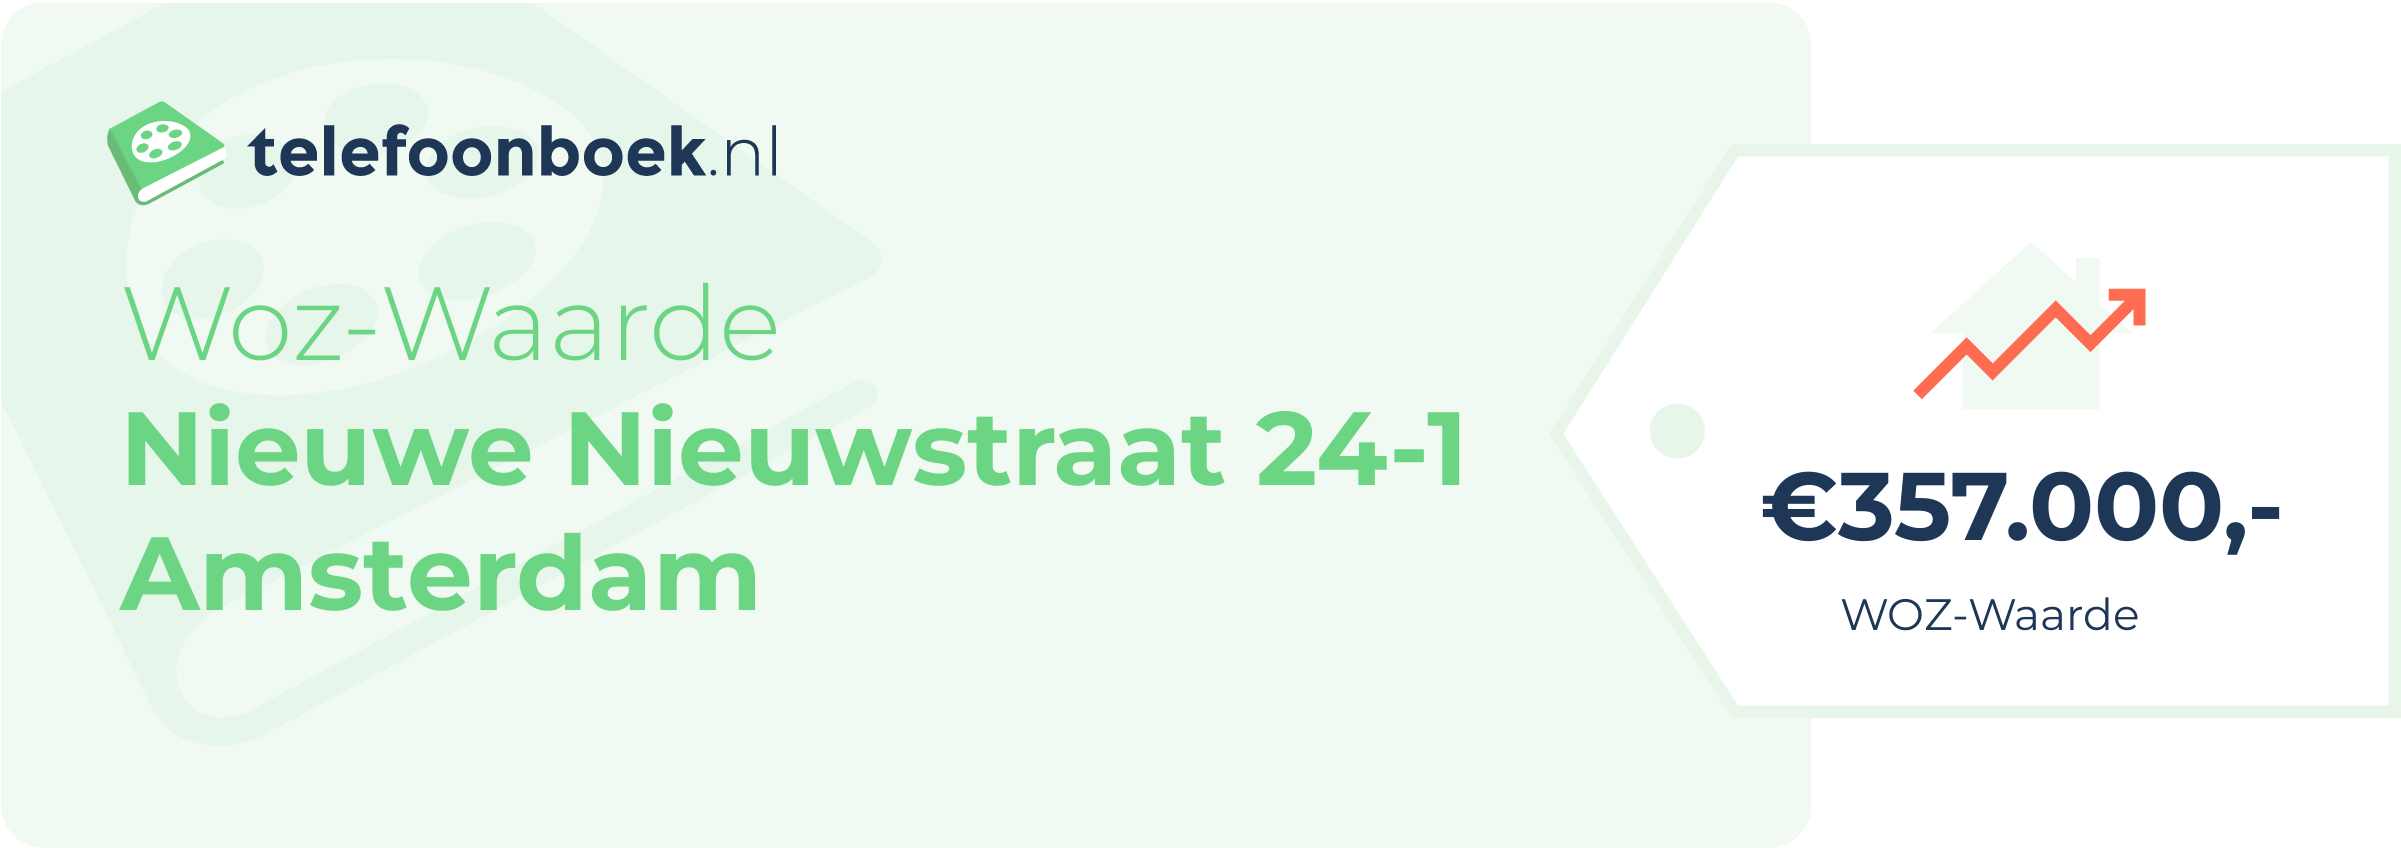 WOZ-waarde Nieuwe Nieuwstraat 24-1 Amsterdam